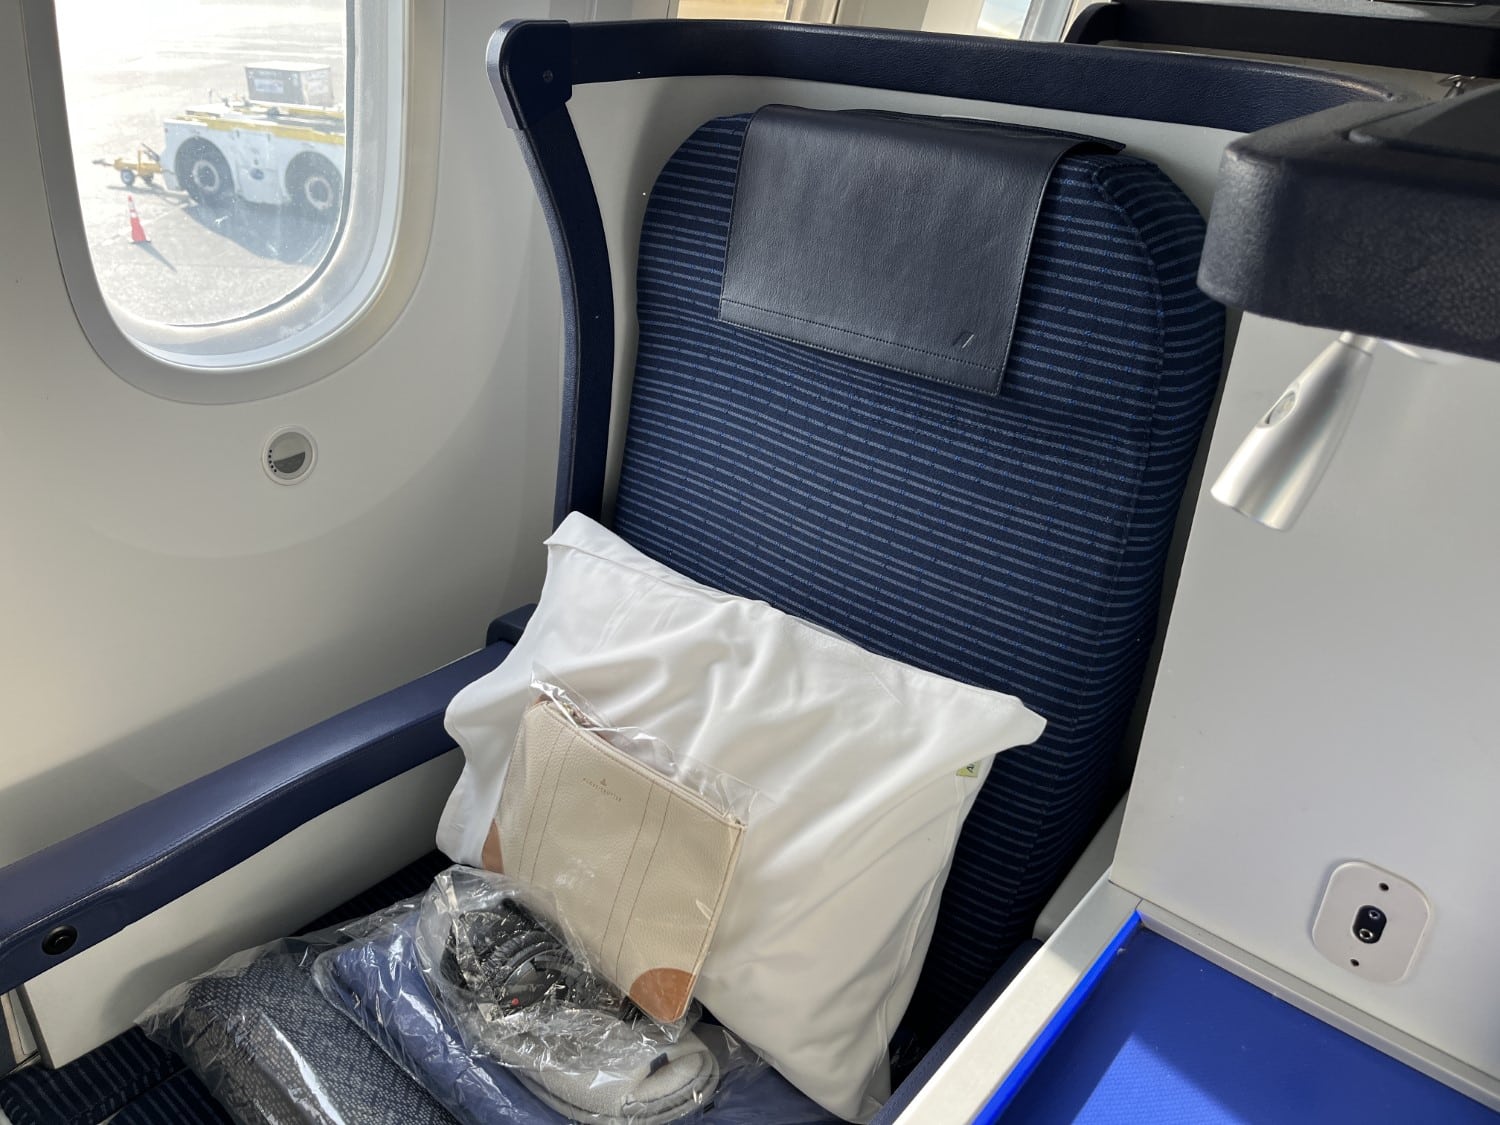 ana business class 787 window seat with amenities